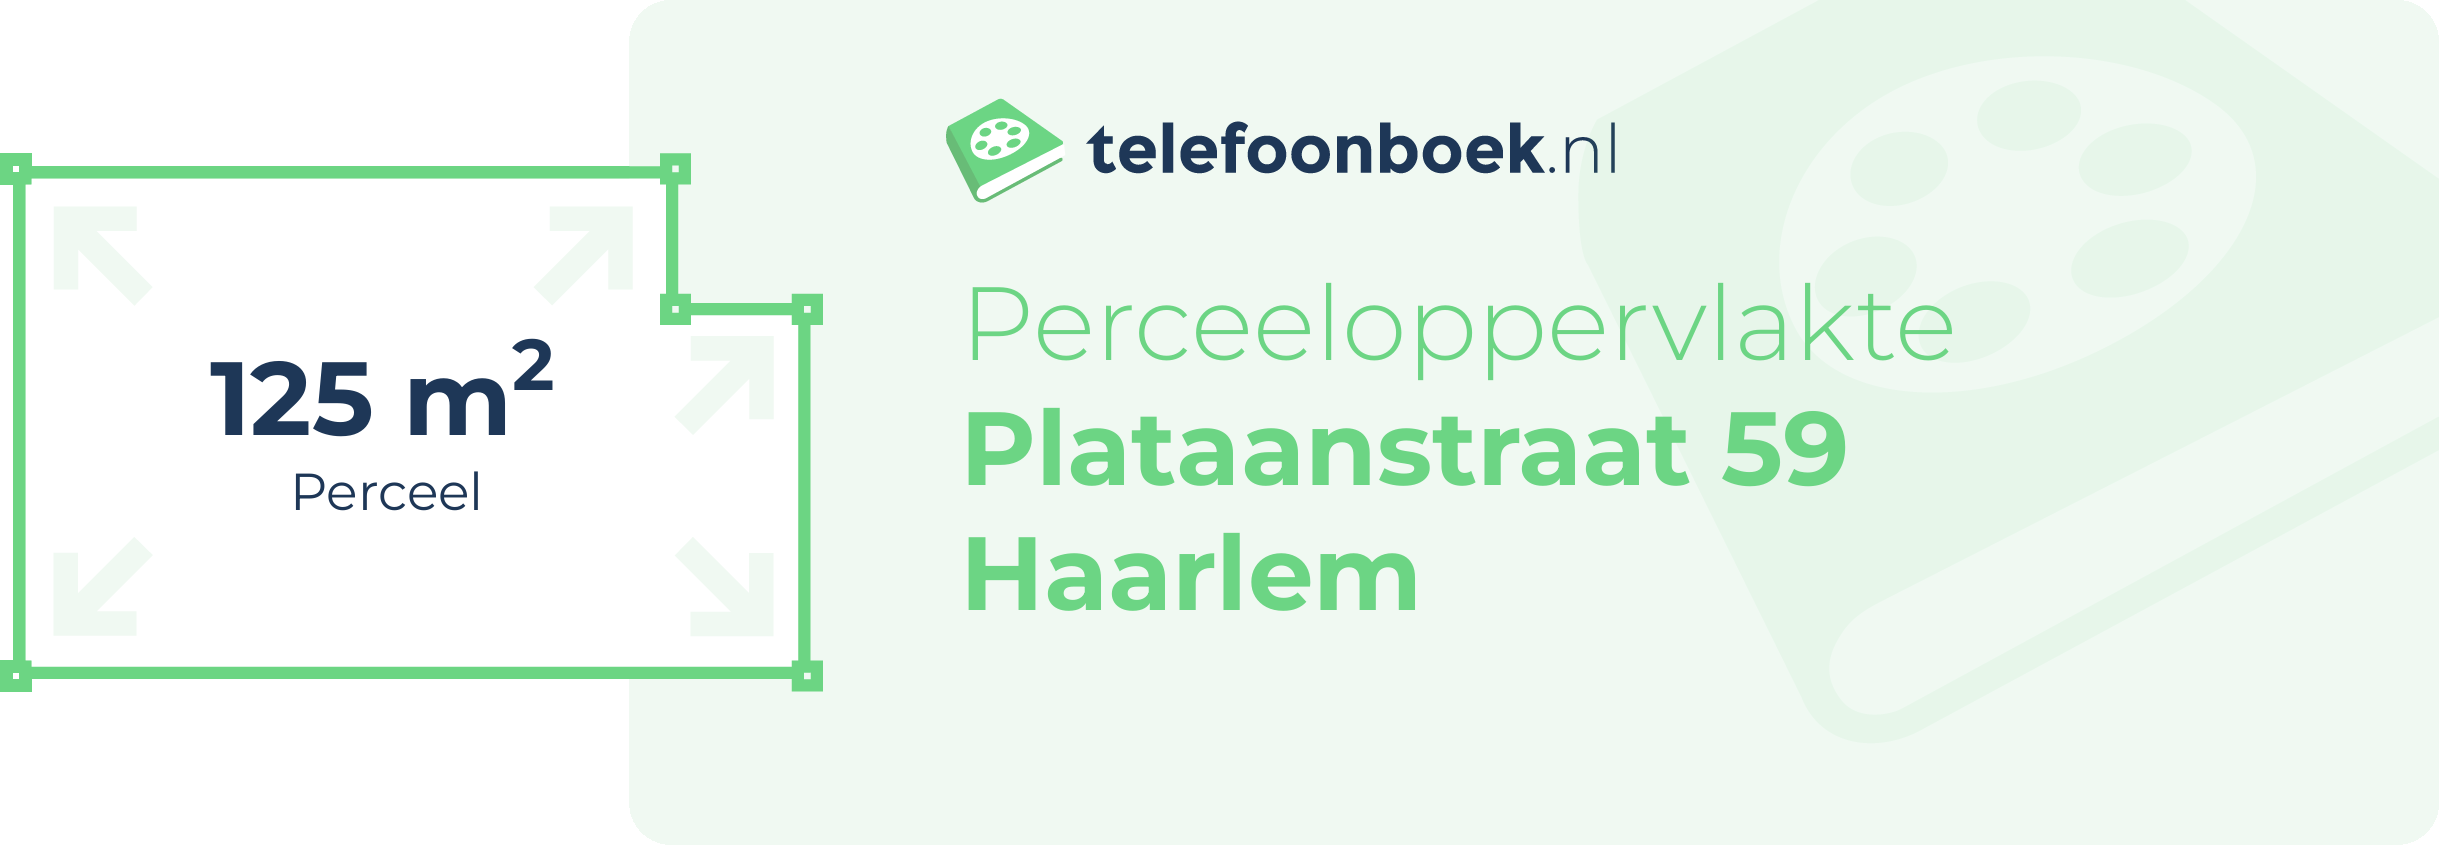 Perceeloppervlakte Plataanstraat 59 Haarlem